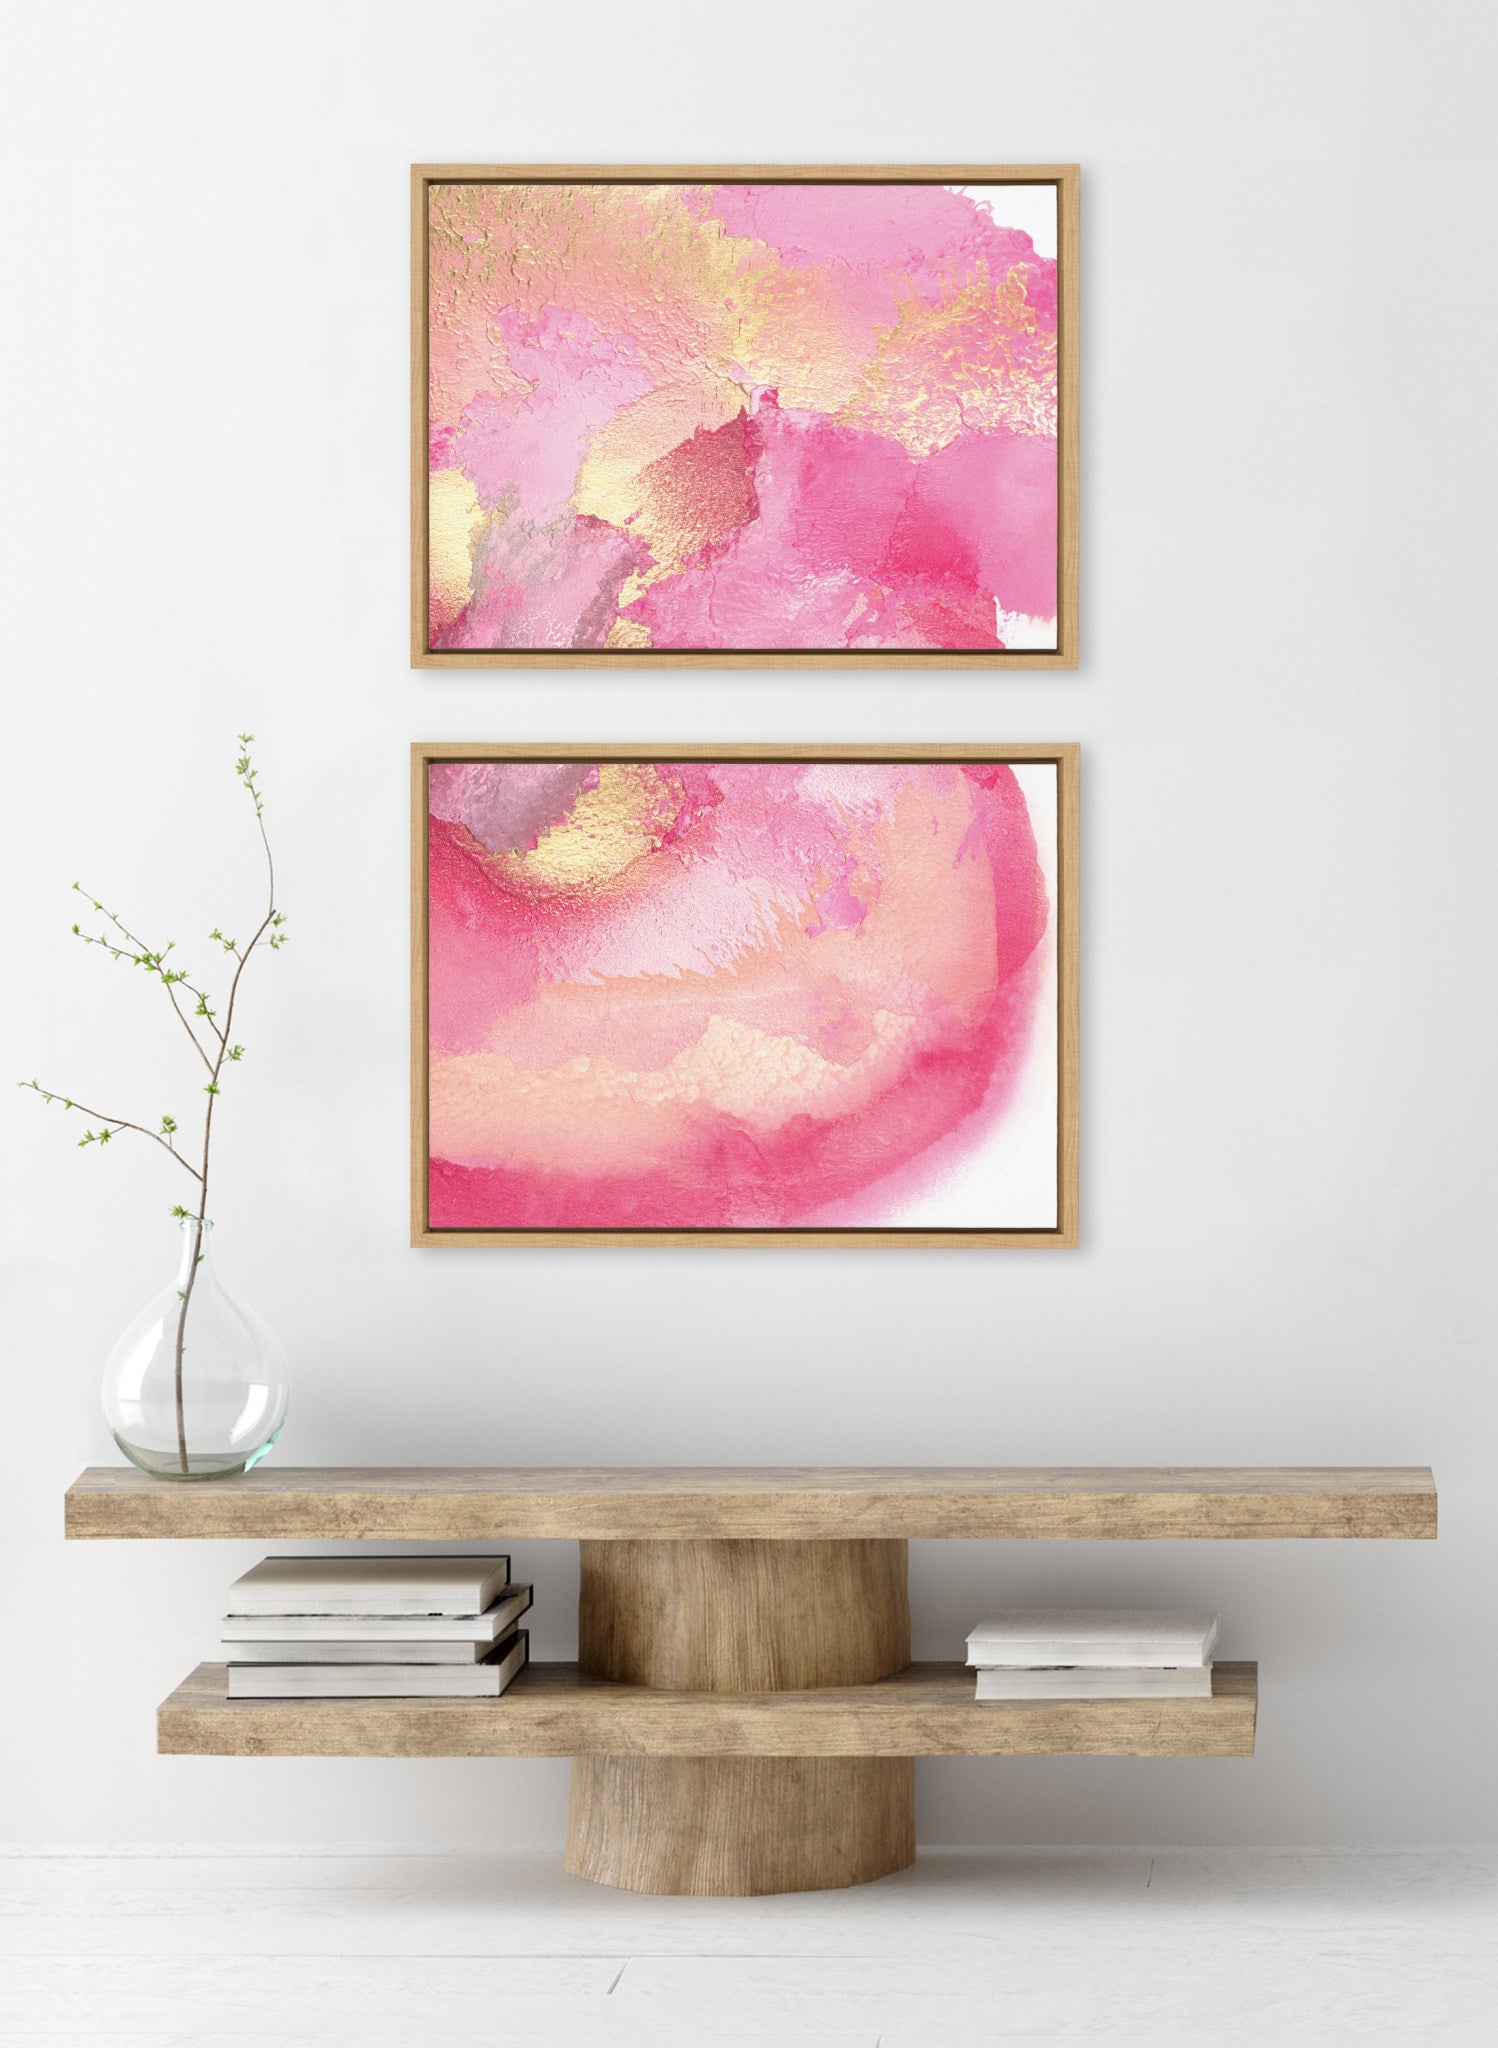 Sylvie MP Pink Golden Hour 1 and 2 Framed Canvas Art Set by Mentoring Positives